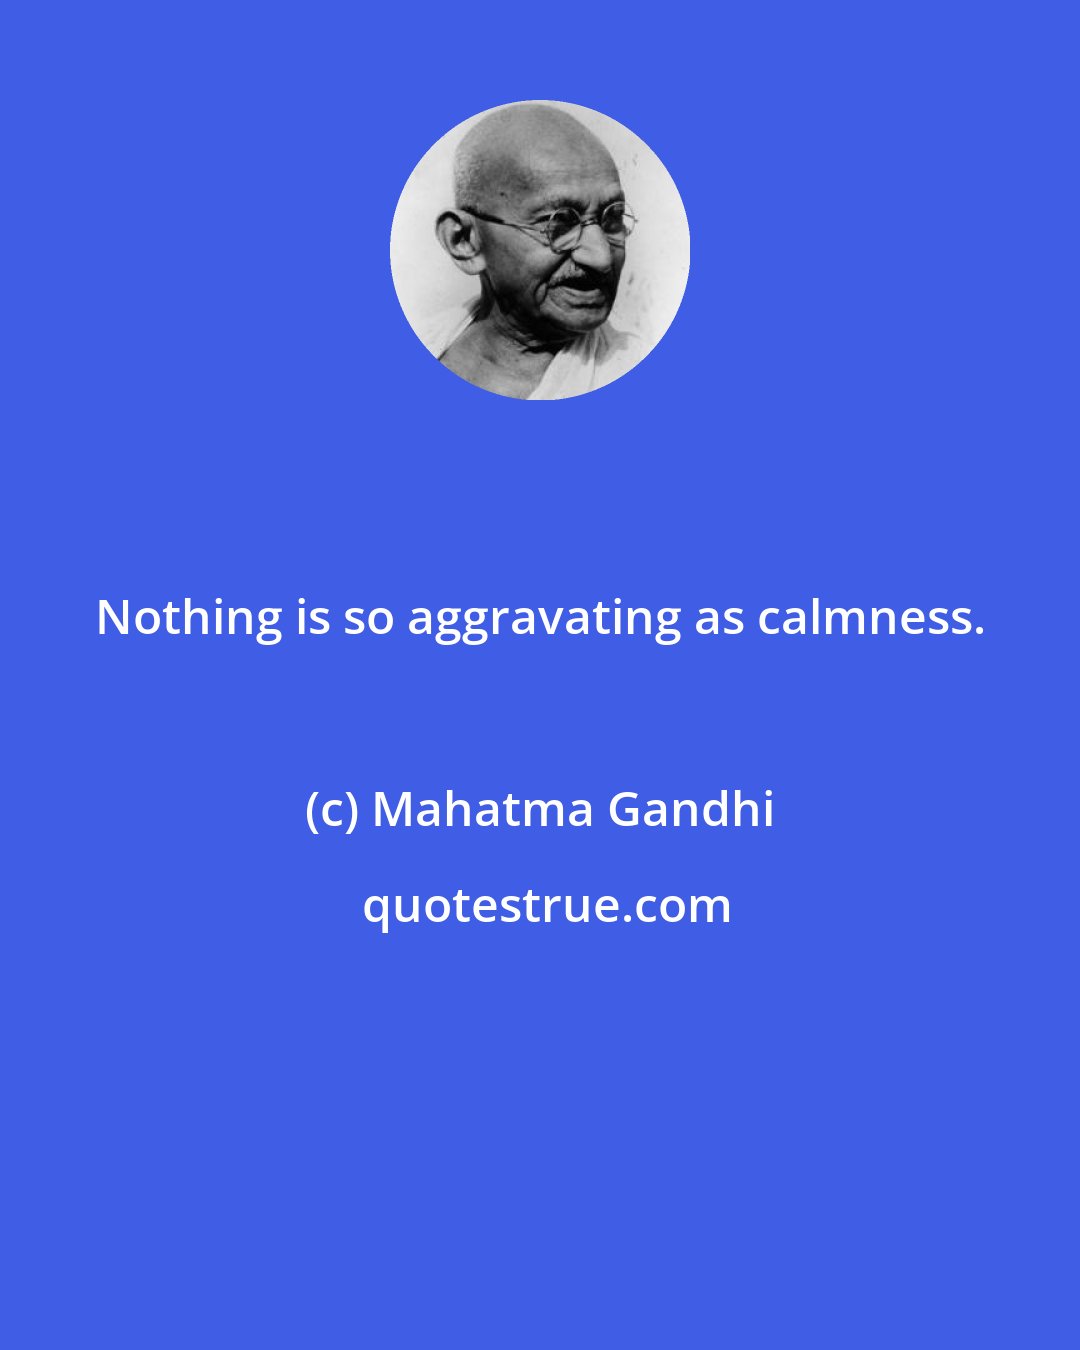 Mahatma Gandhi: Nothing is so aggravating as calmness.